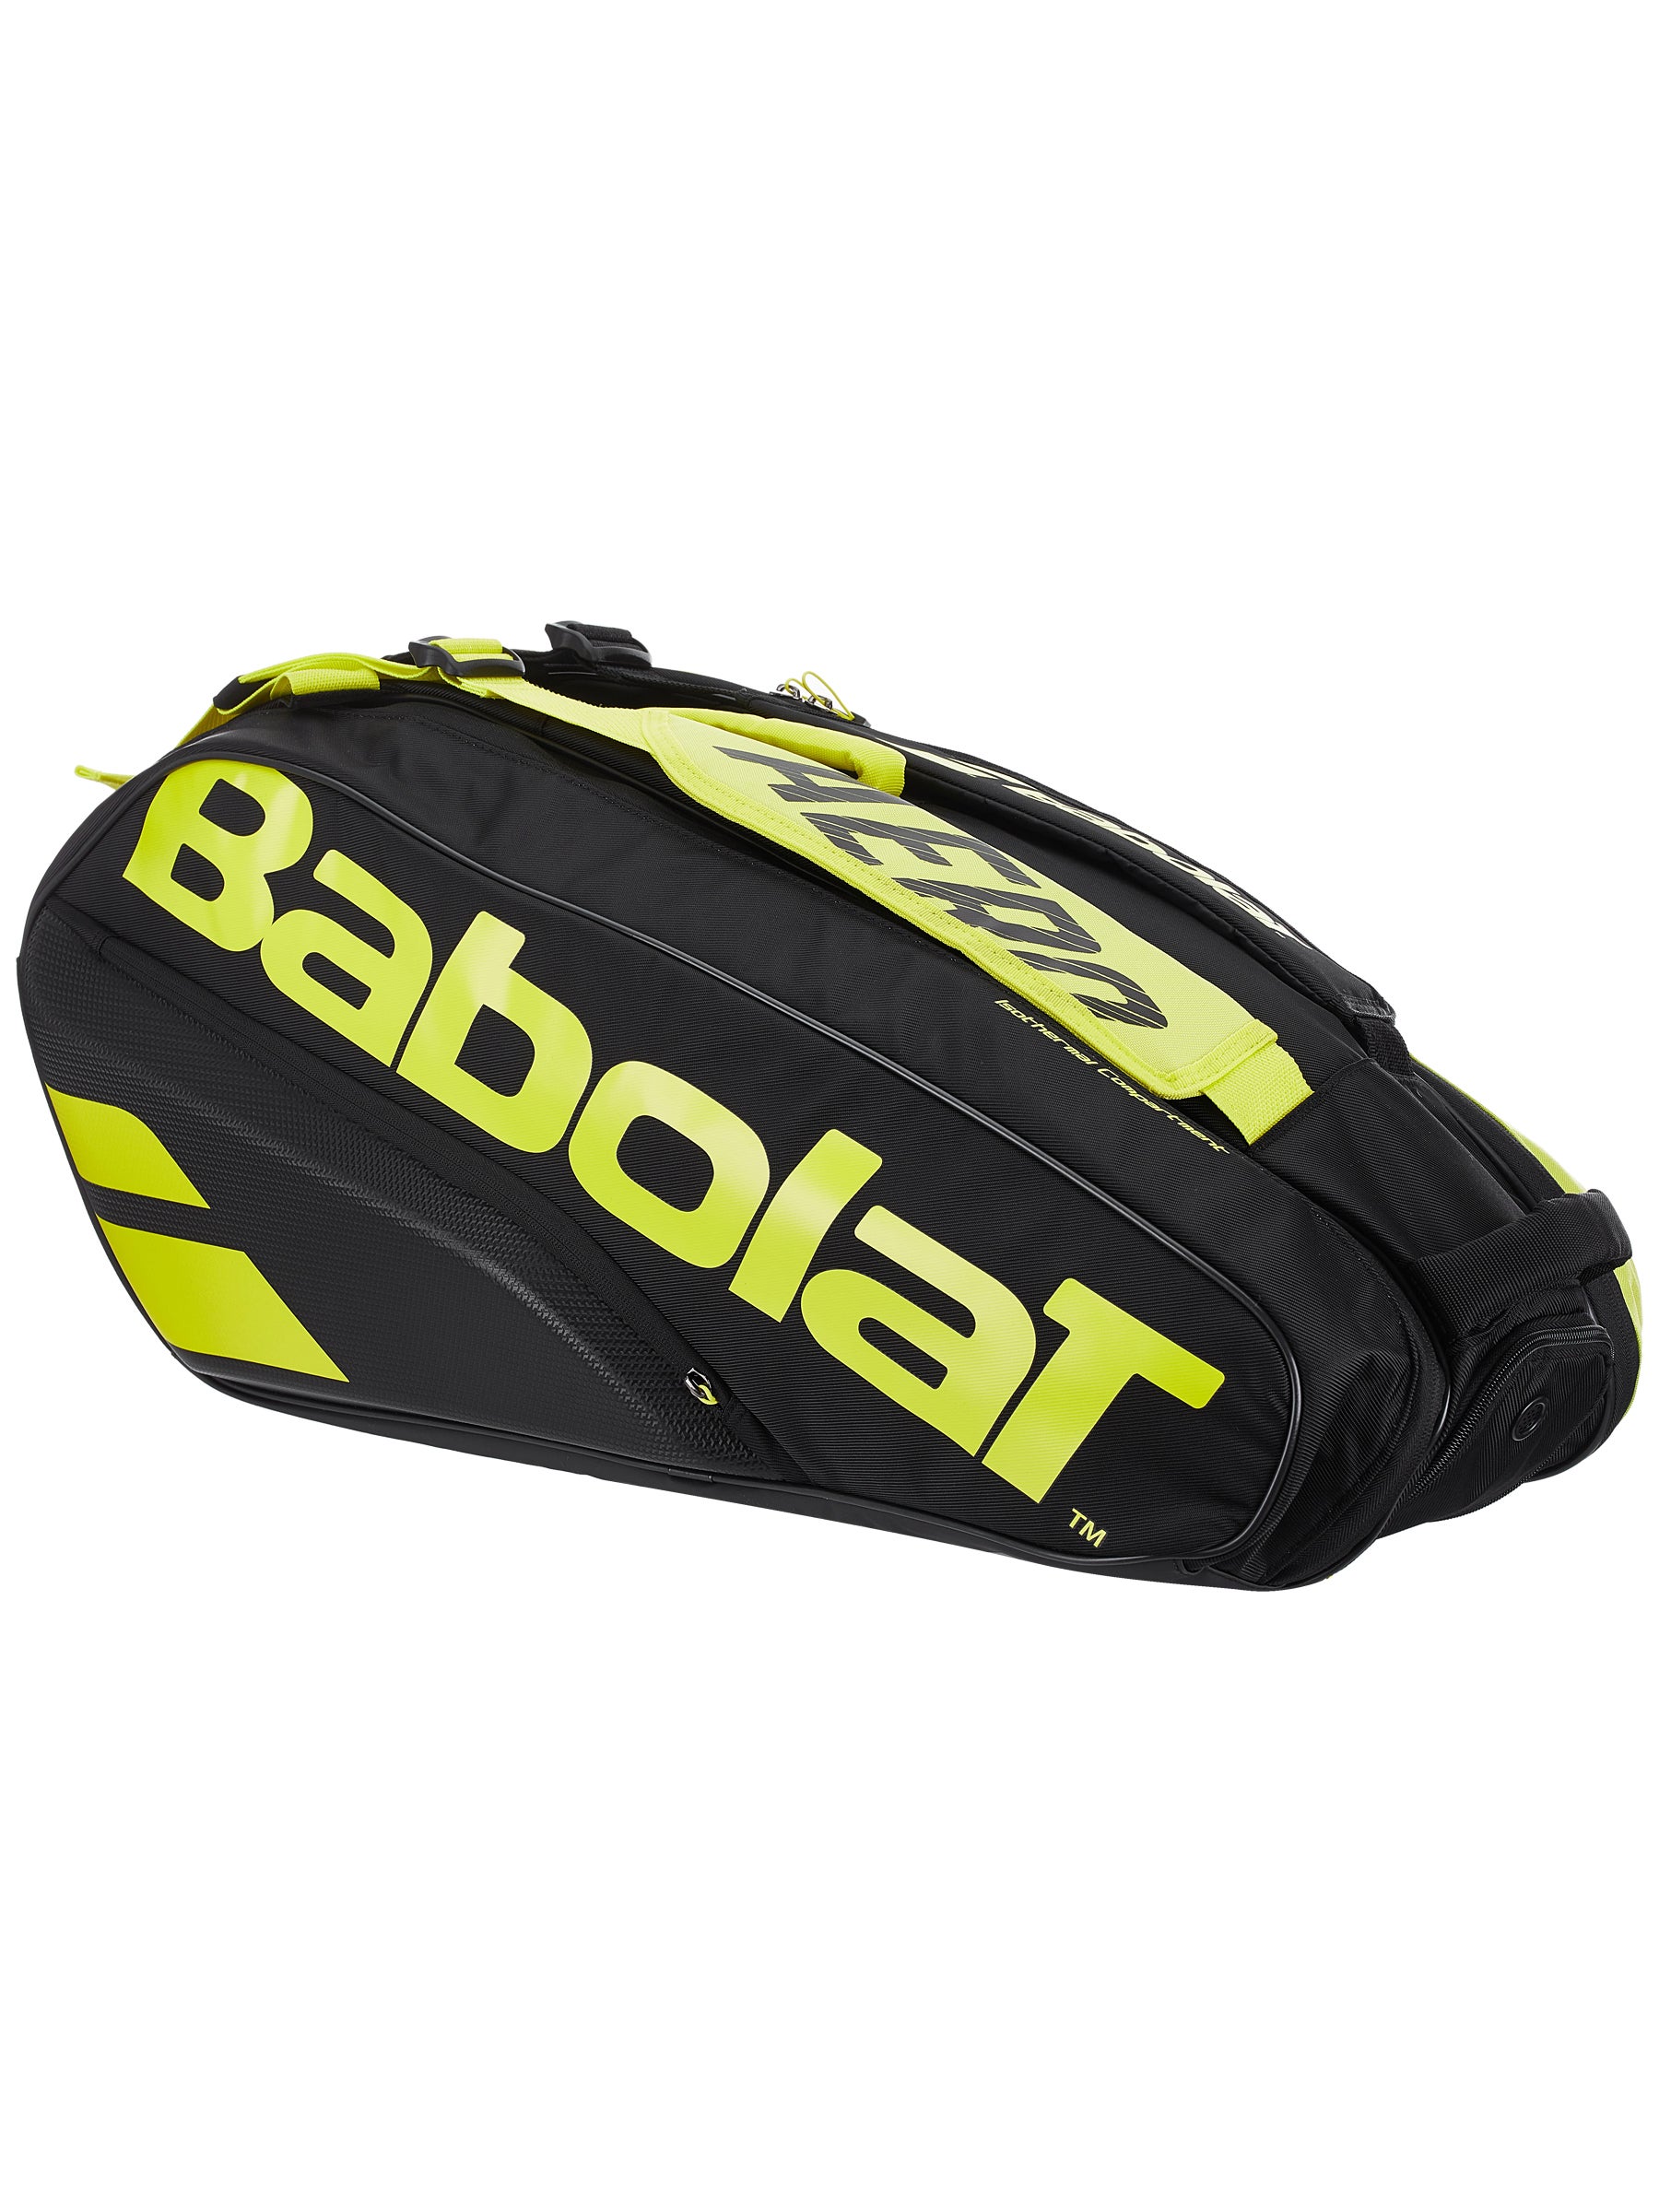 Babolat Pure Aero 6 pk Tennis Bag 